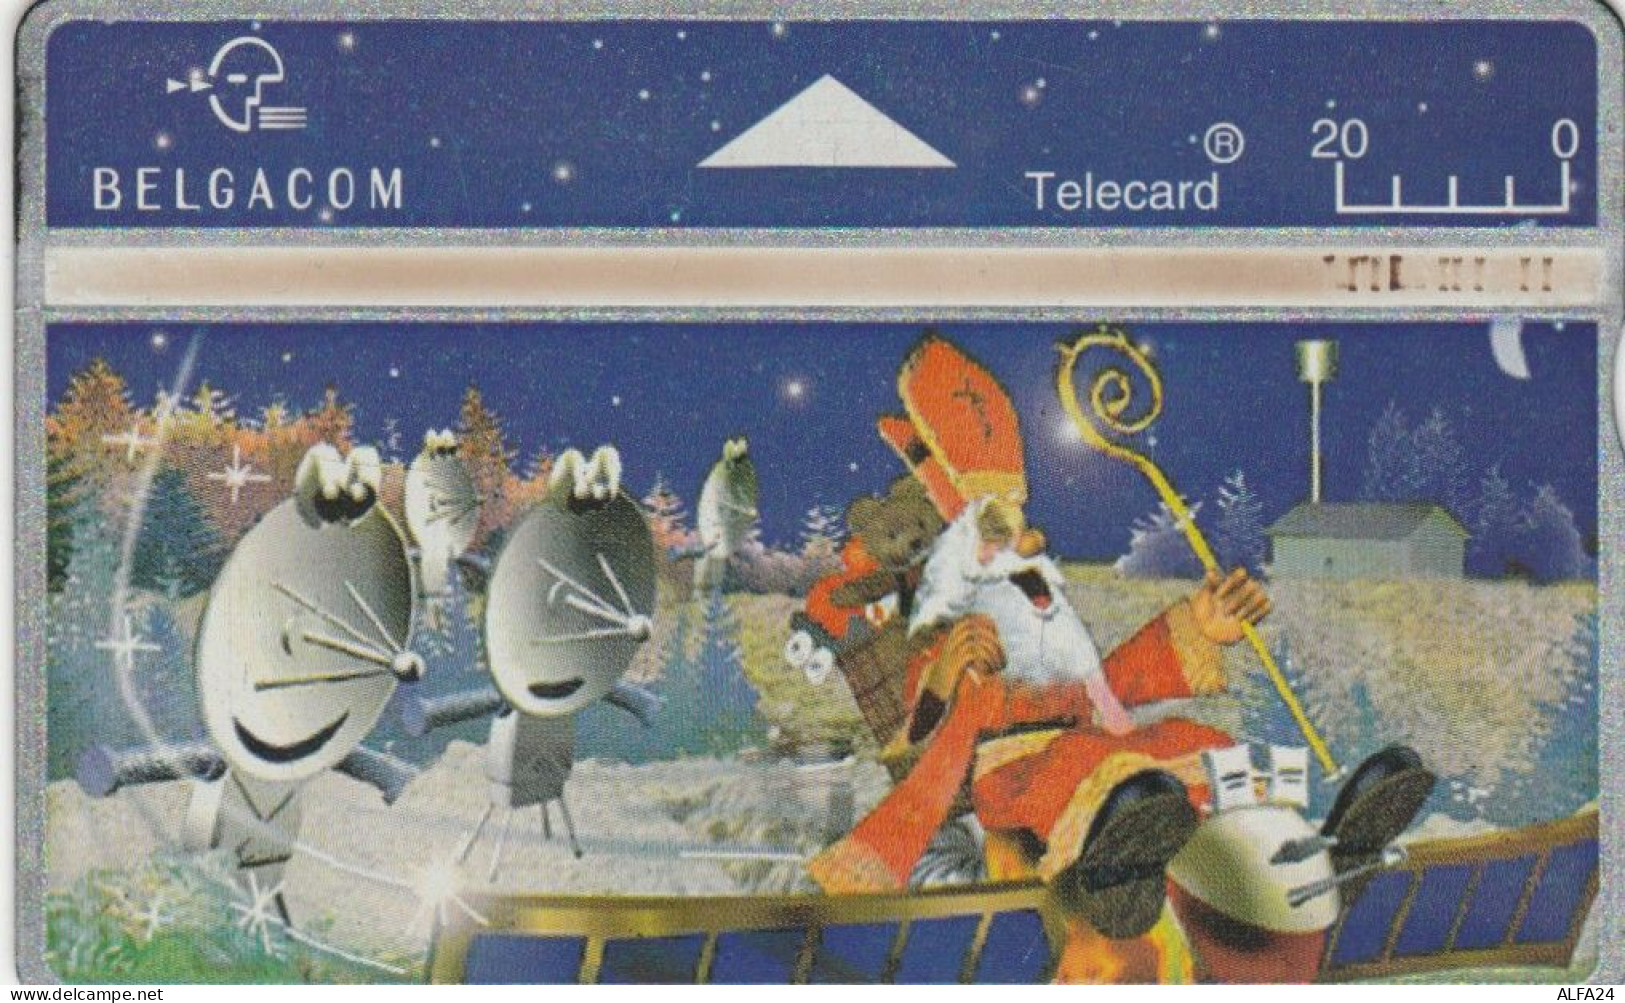 PHONE CARD BELGIO LANDIS (CK5824 - Senza Chip